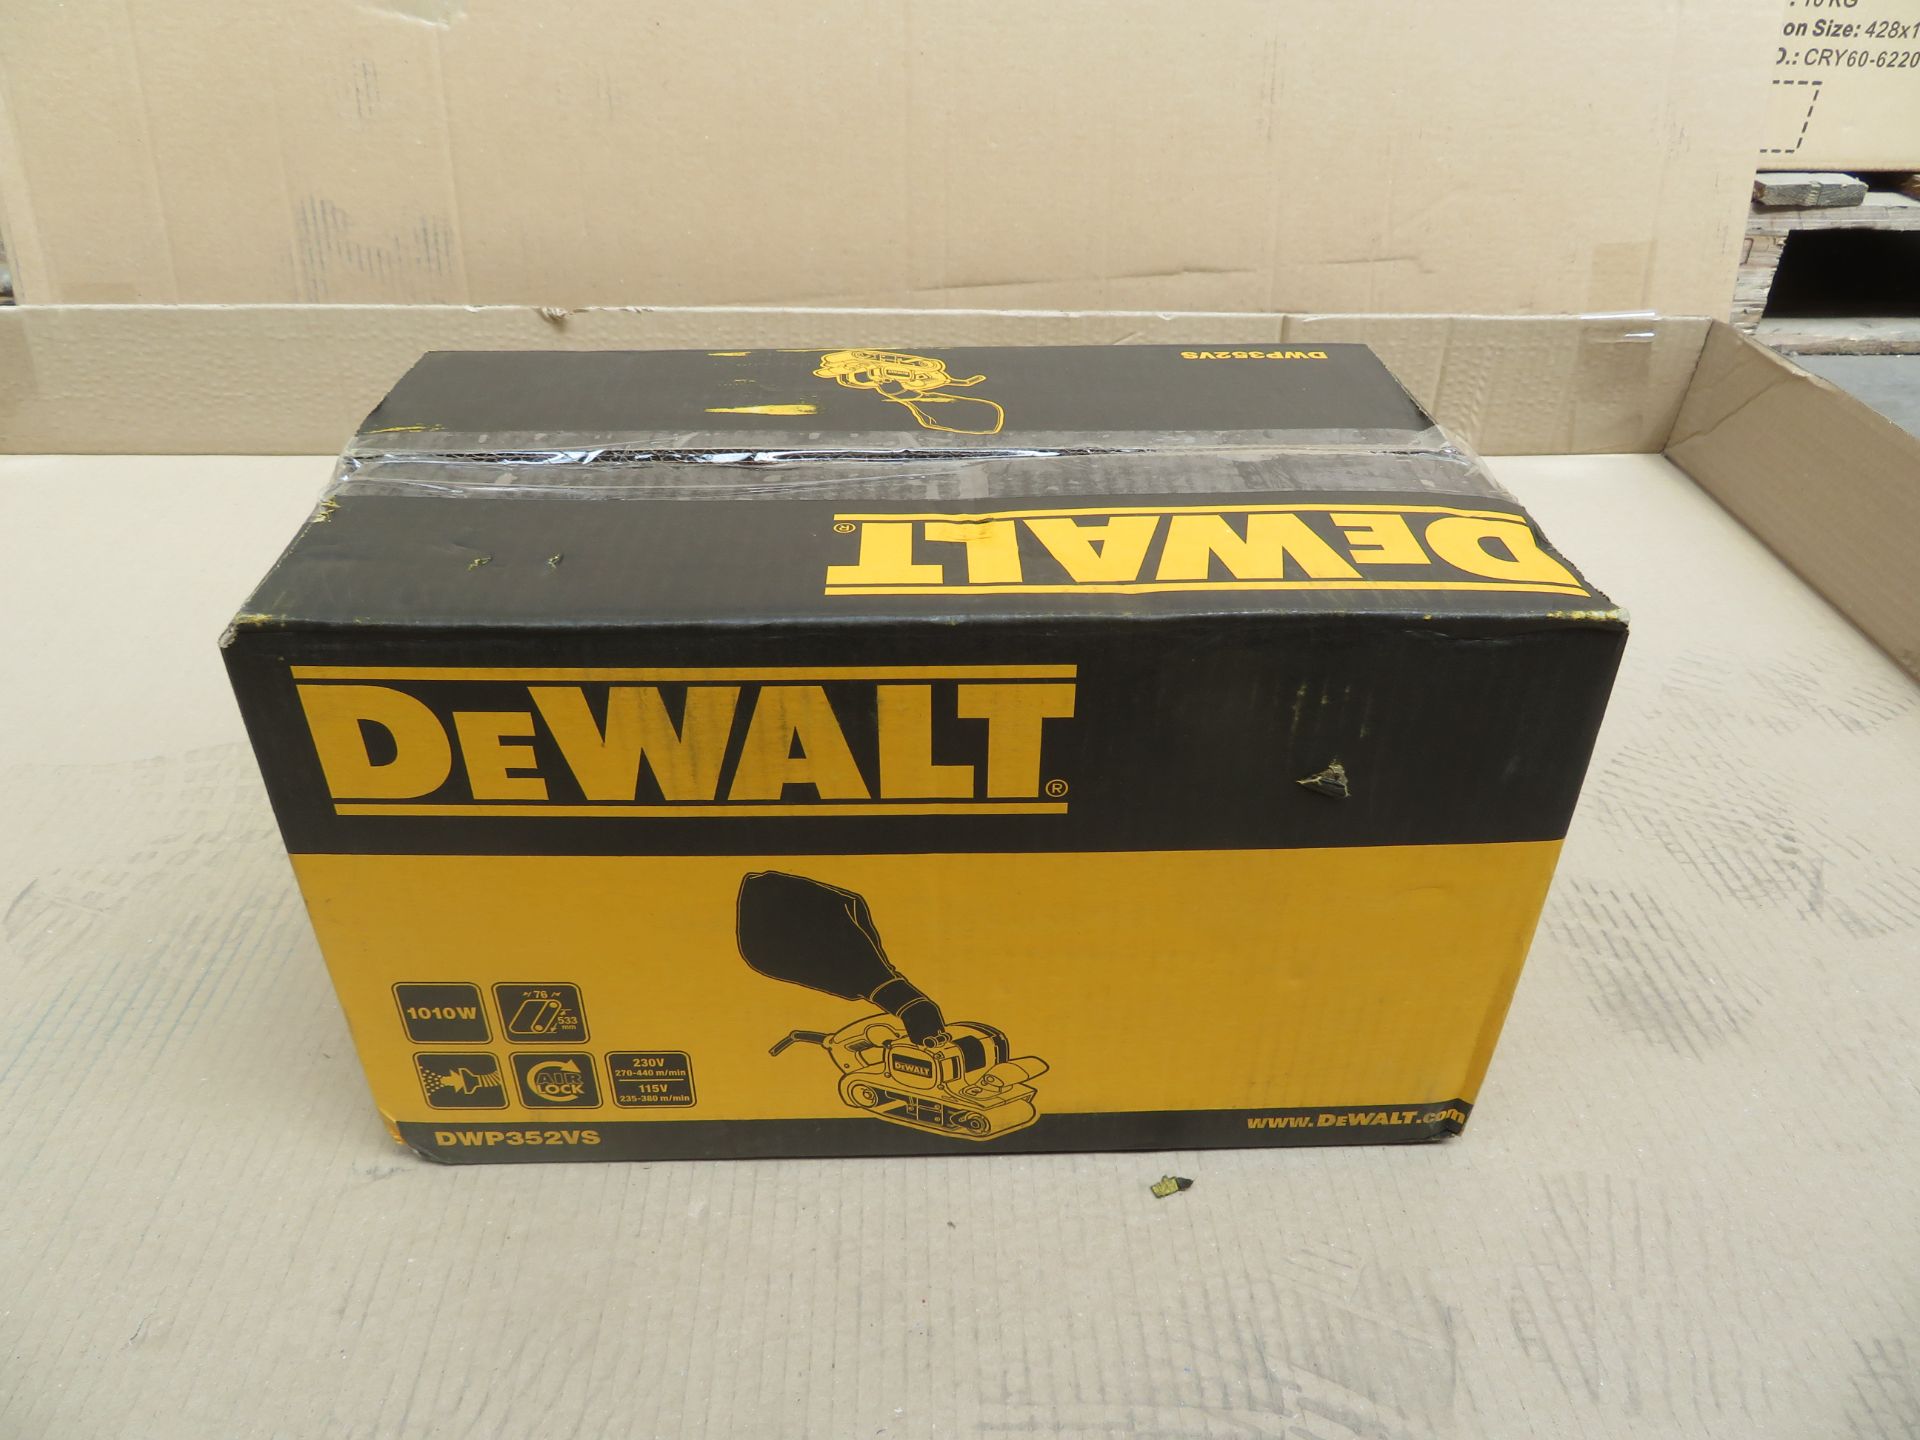 (A17) Dewalt Dwp352Vs-Gb 3" Belt Sander 240V - New Condition, Slightly Tatty Box. - Bild 2 aus 5